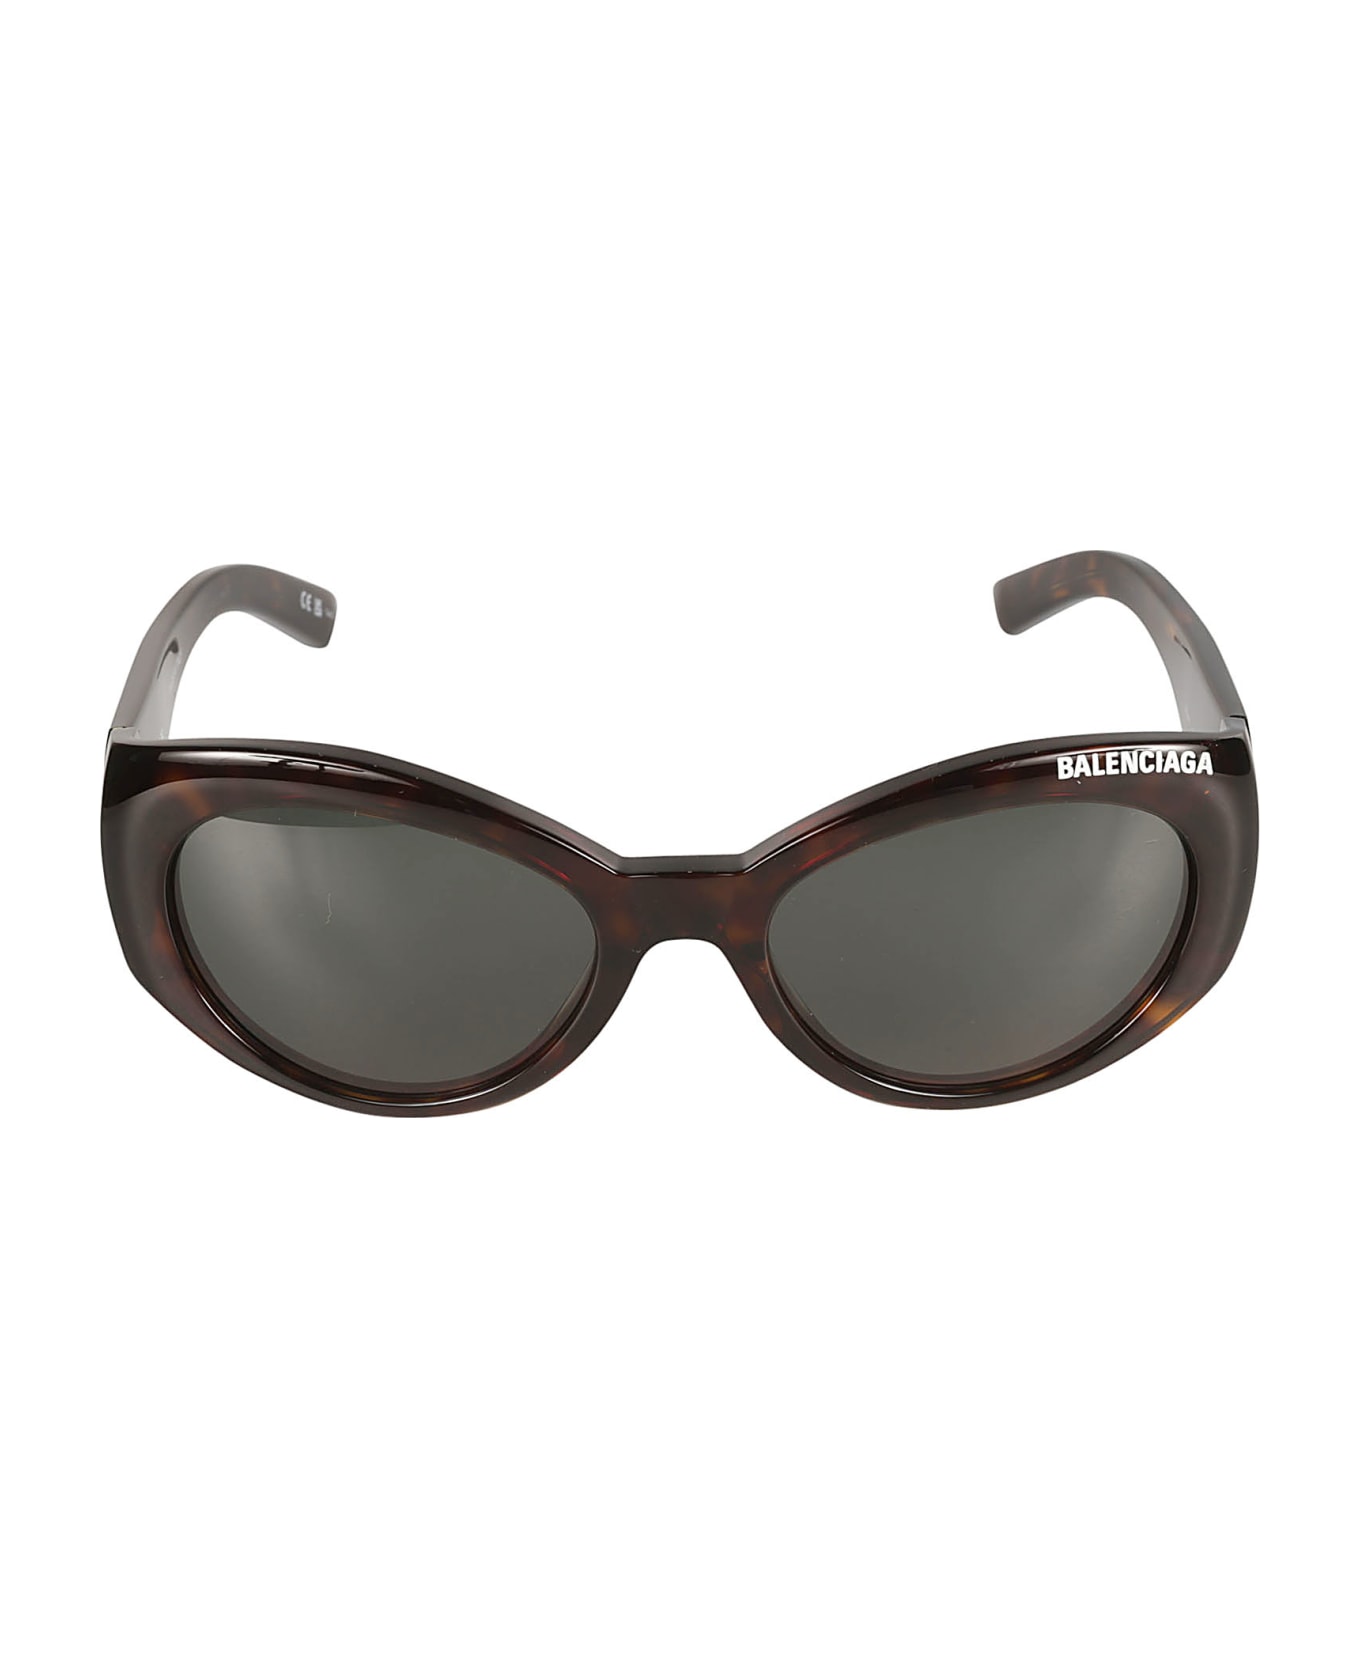 Balenciaga Eyewear Flame Effect Round Frame Sunglasses - Havana/Green